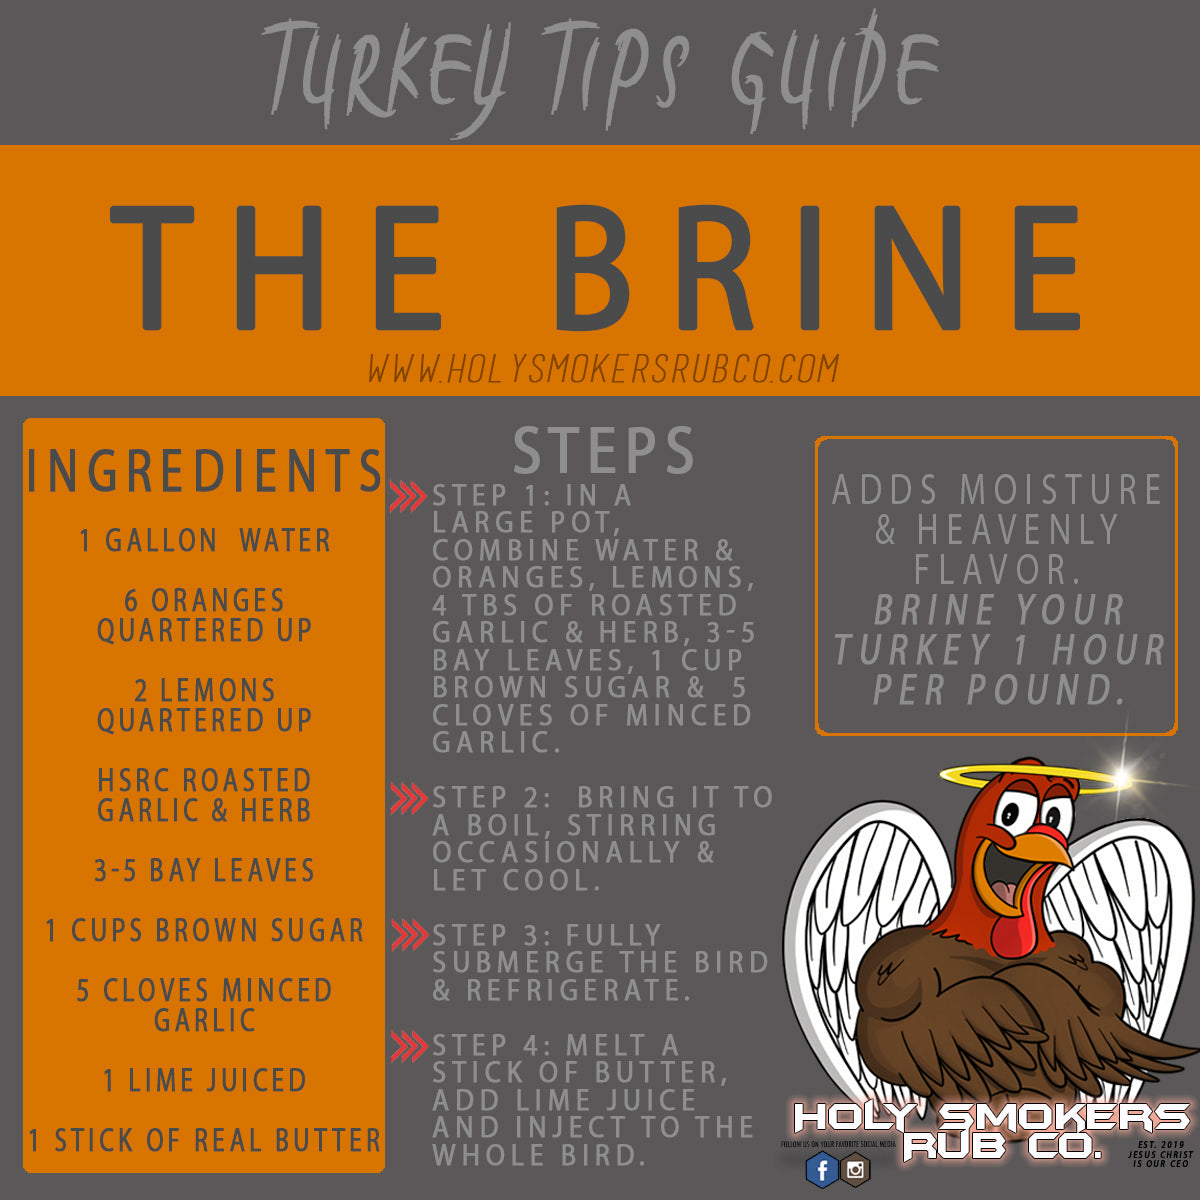 Turkey brine guide by Holy Smokers Rub Co